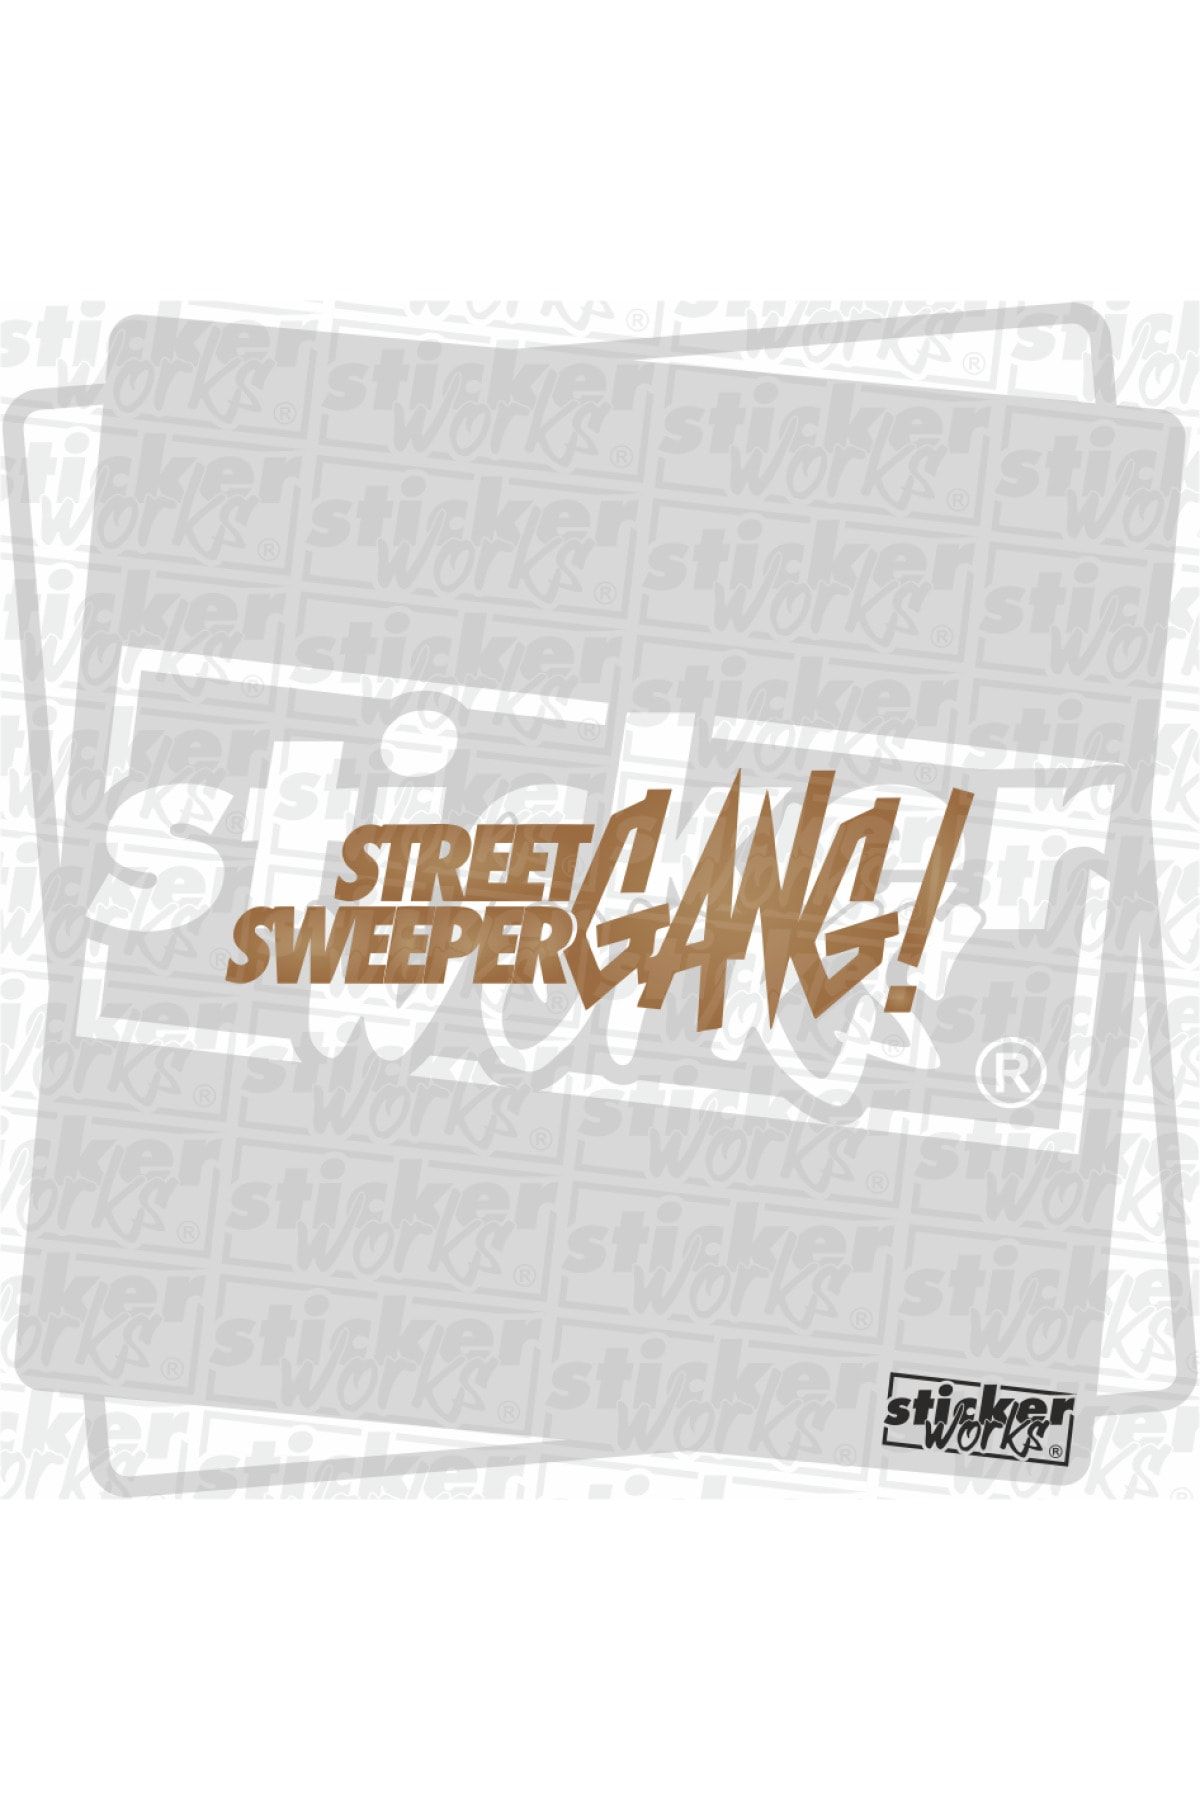 Sticker Works Street Sweeper Gang Sticker